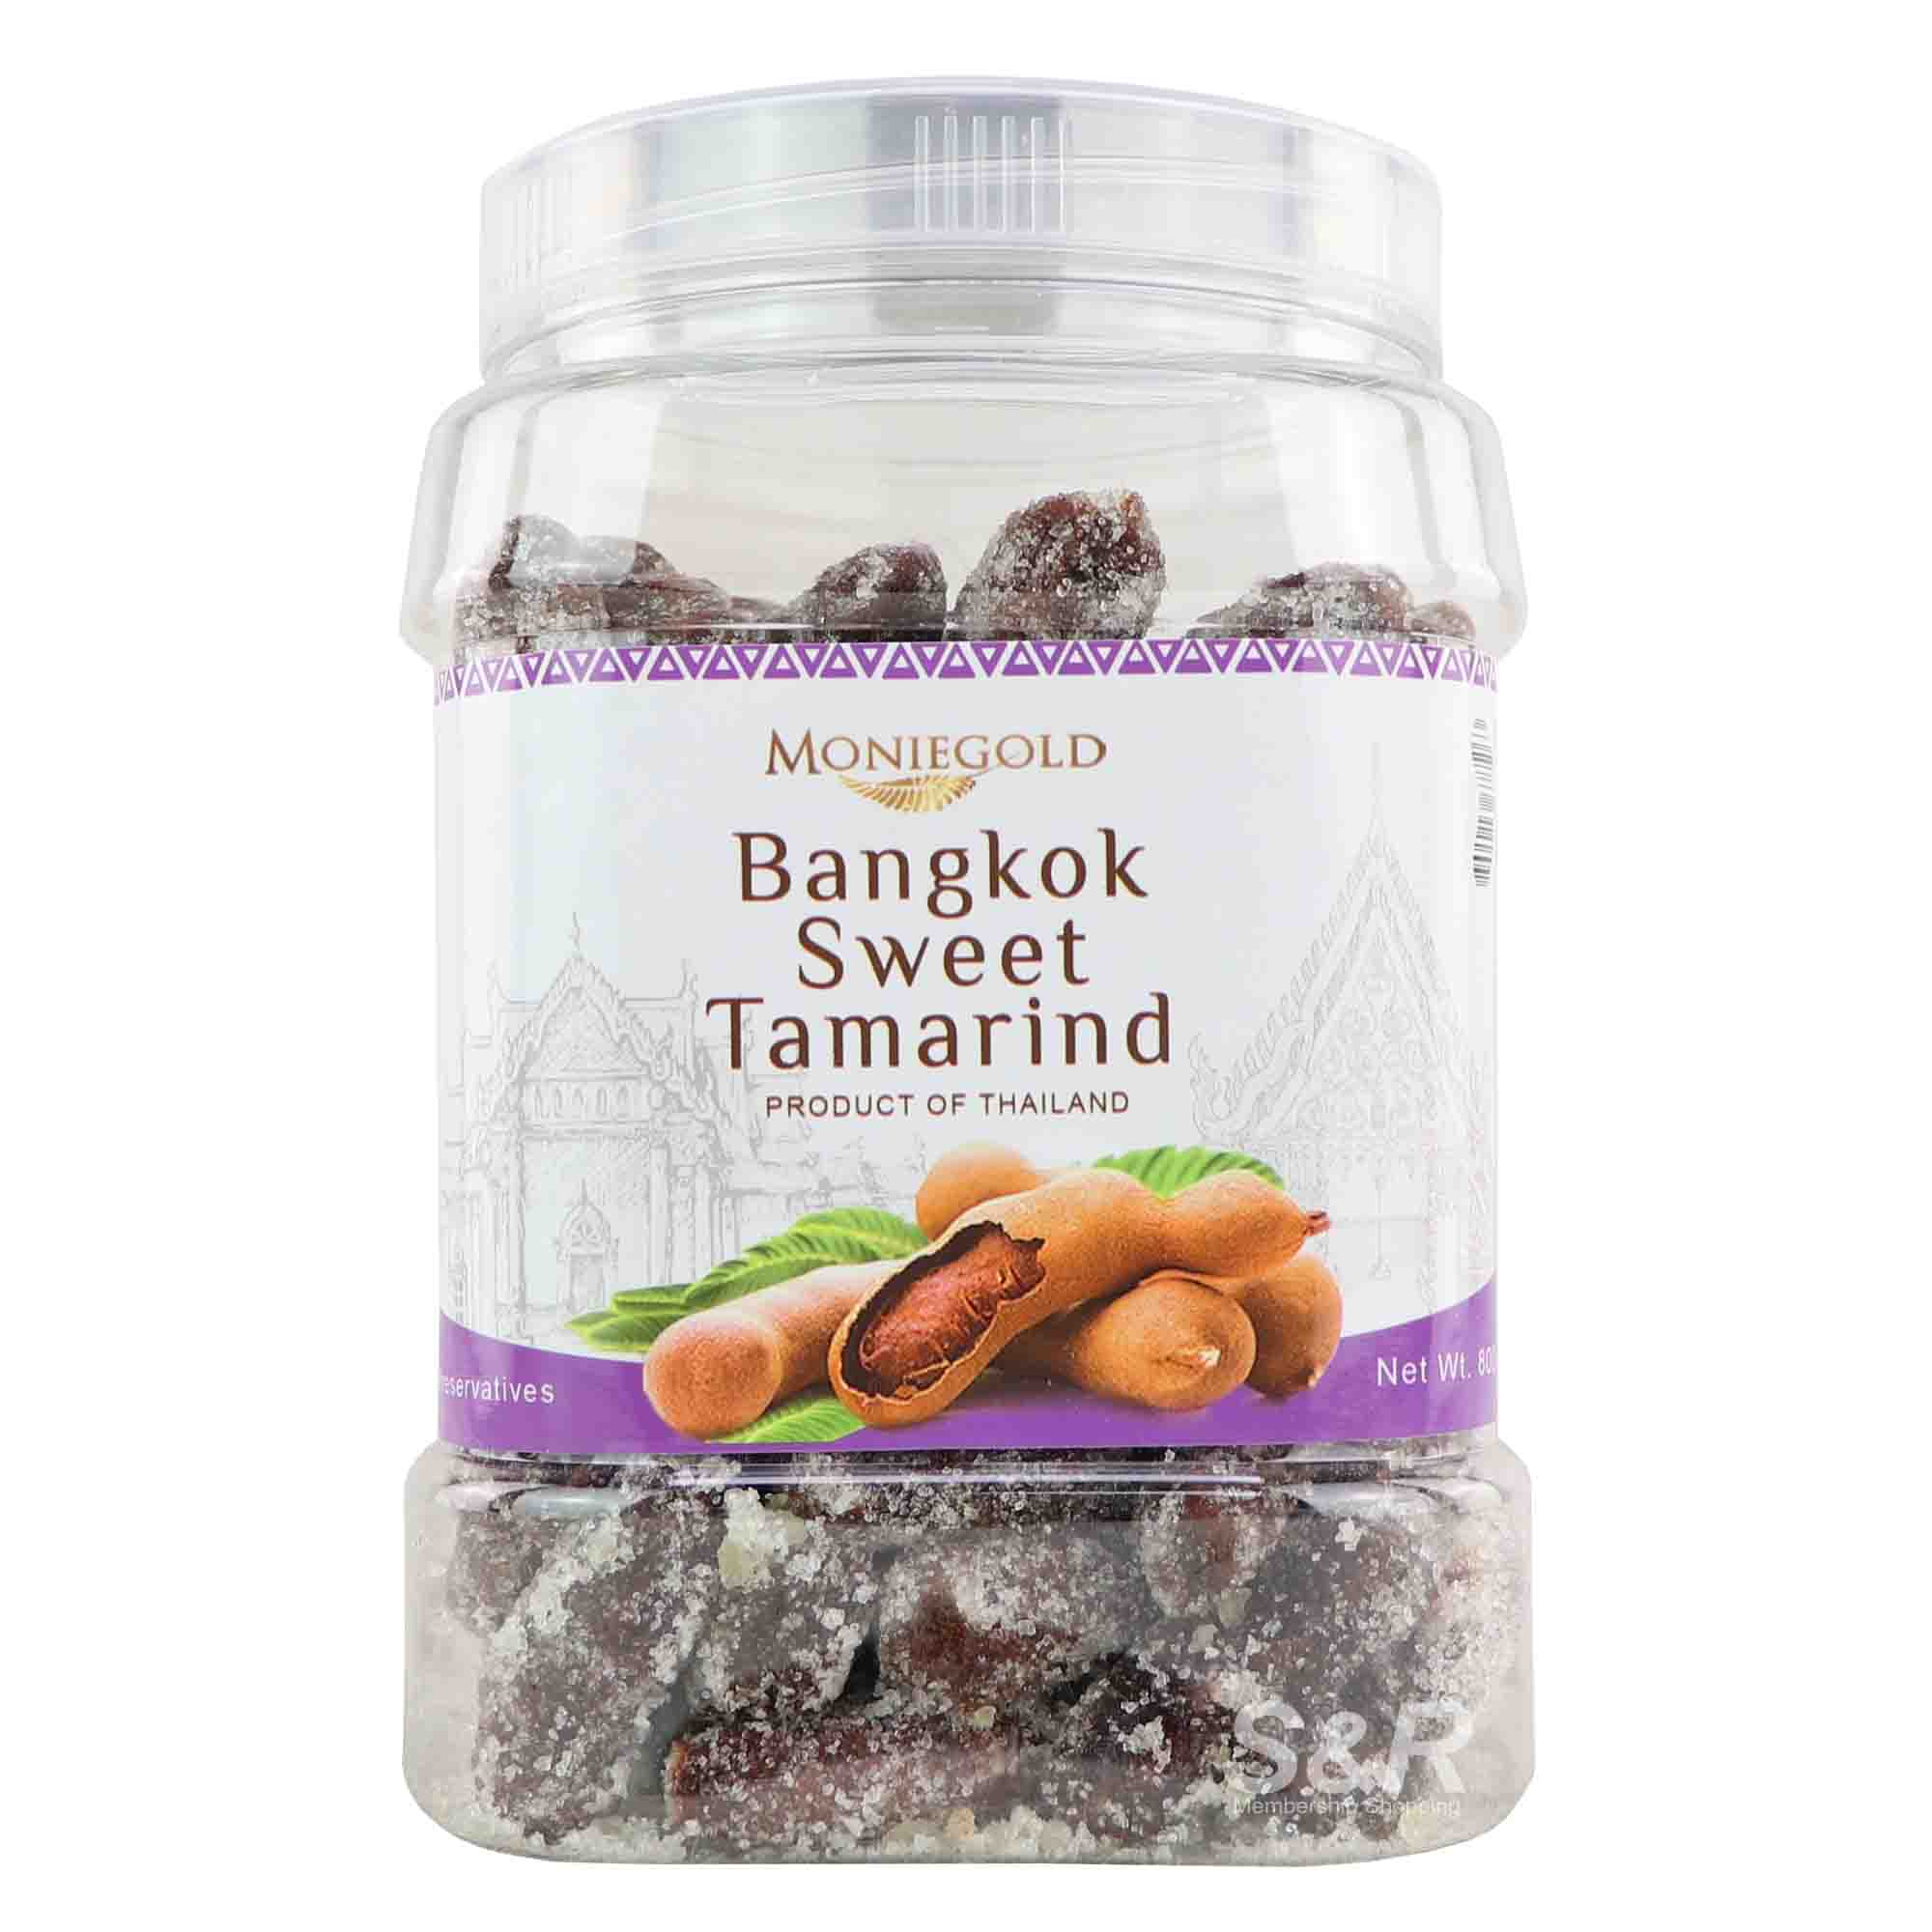 Moniegold Bangkok Sweet Tamarind Candy 800g